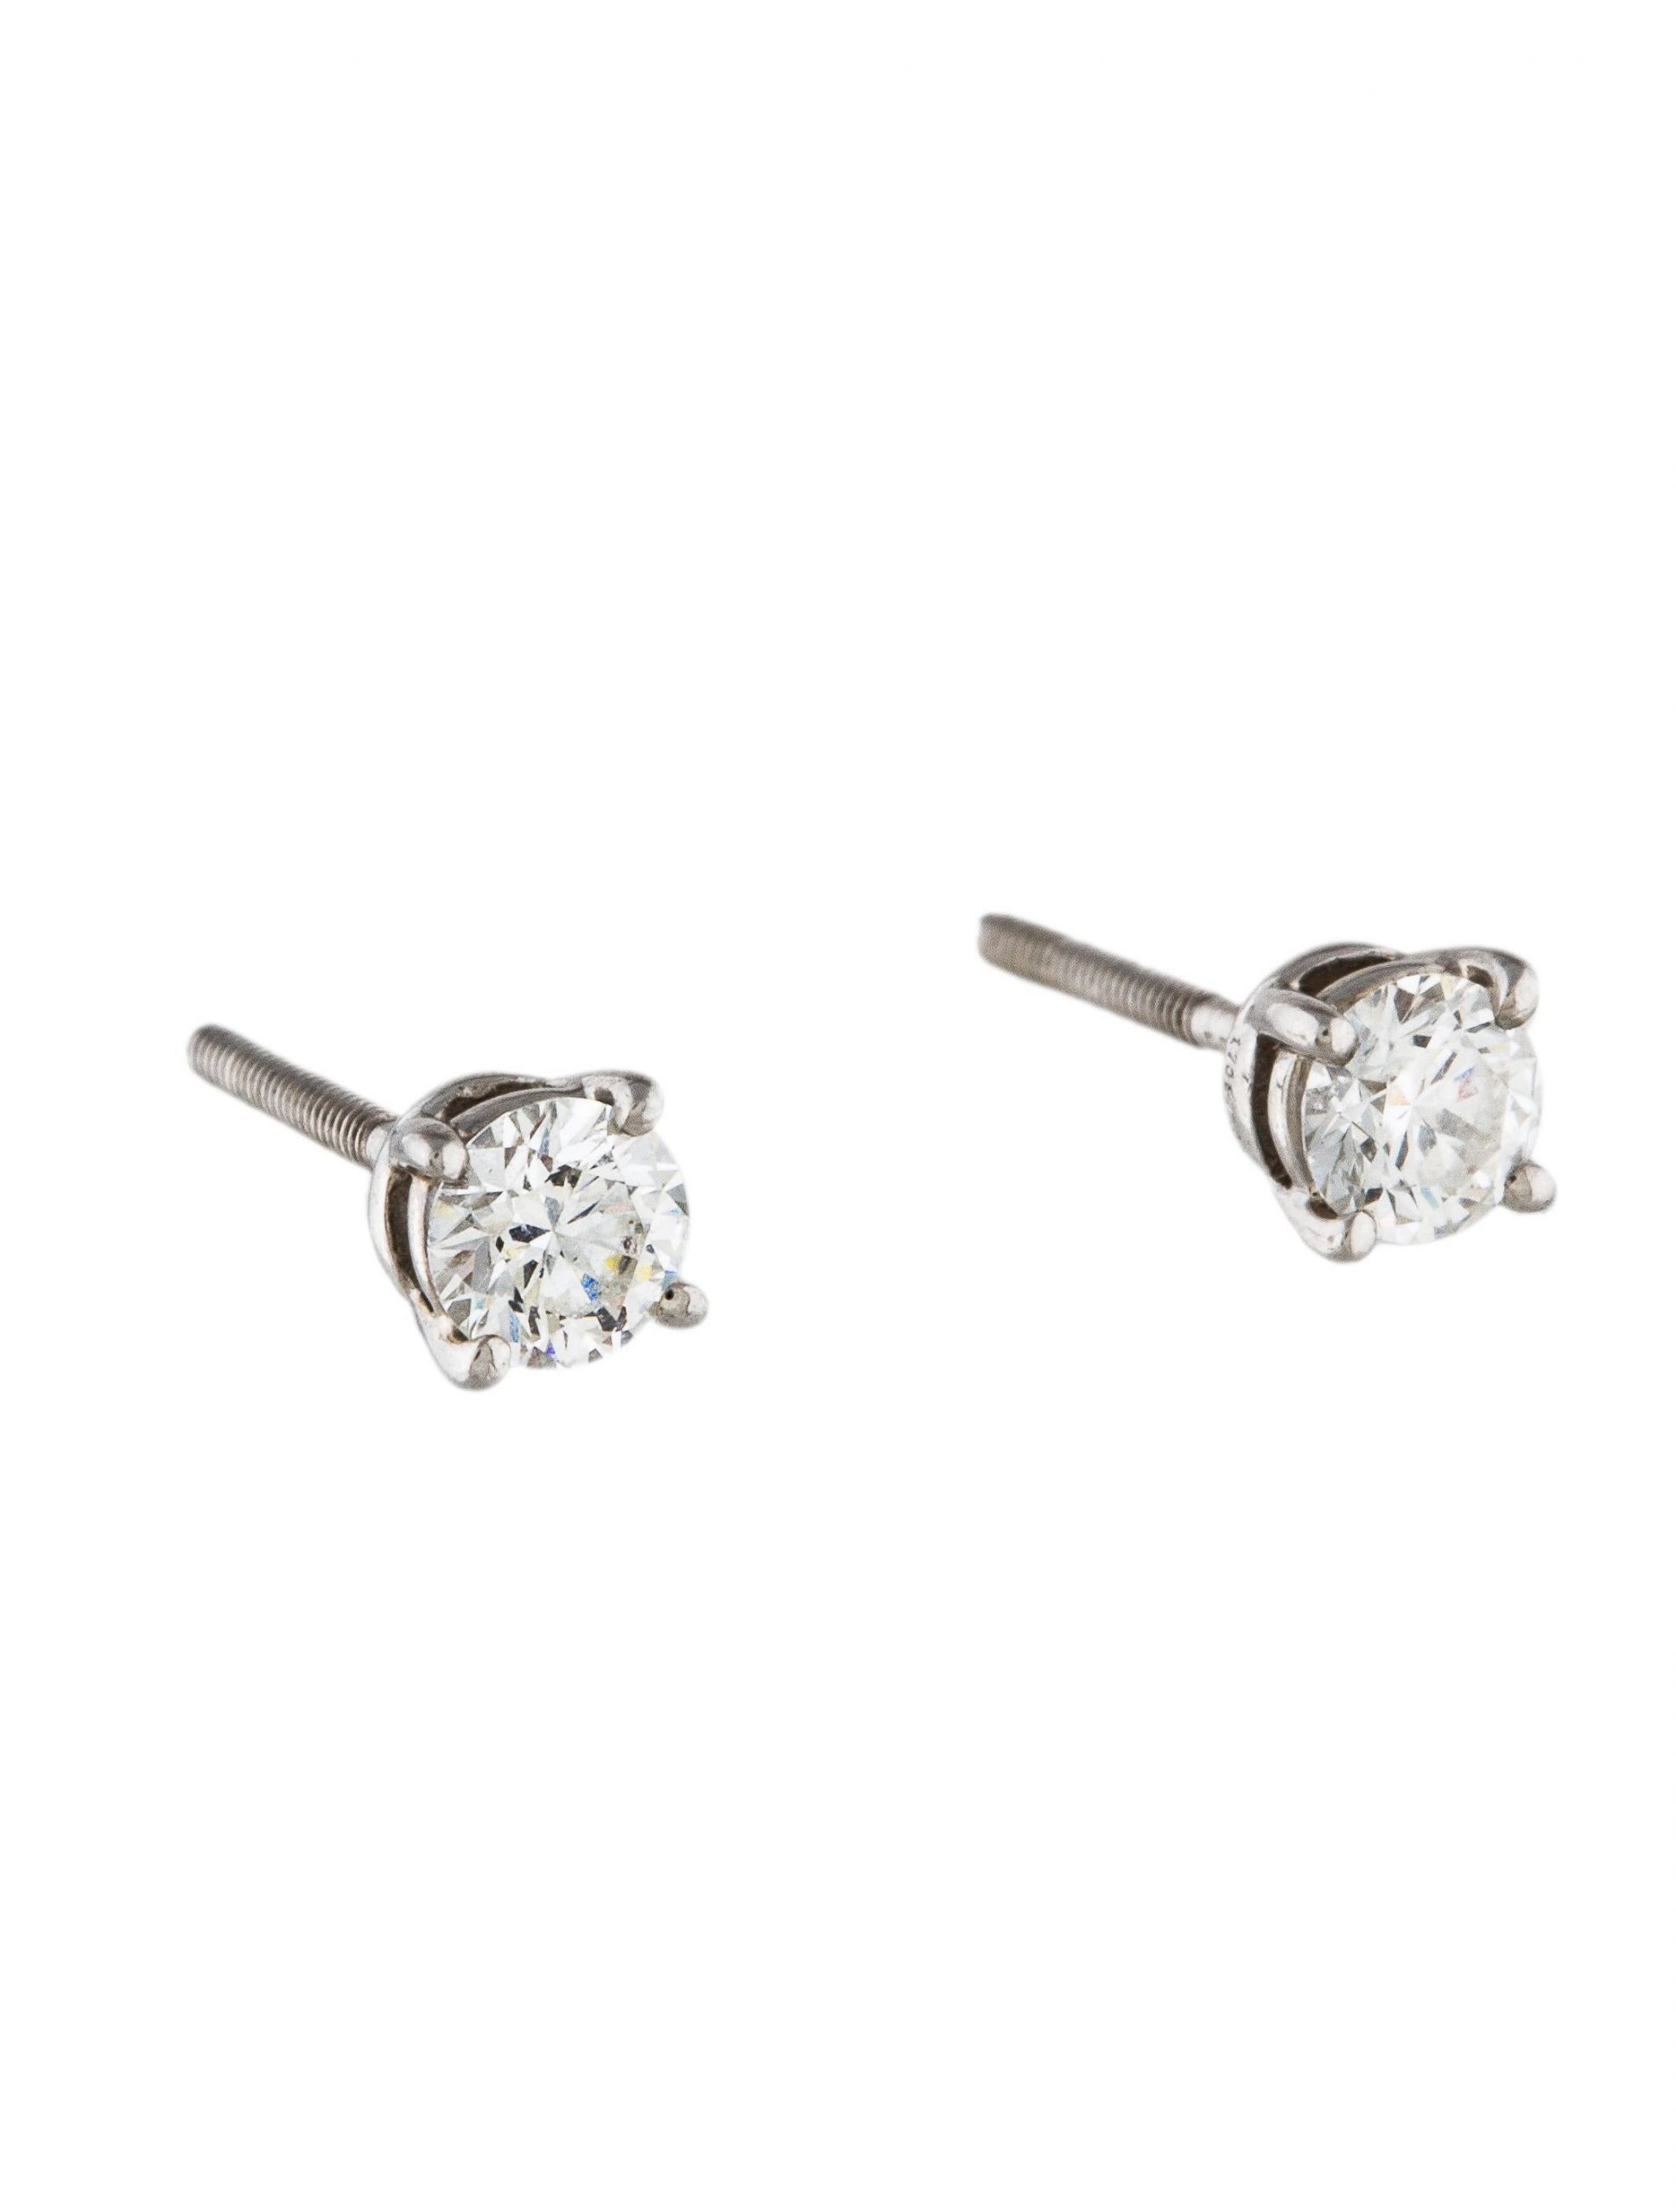 Tiffany Diamond Stud Earrings
 Tiffany & Co Platinum Diamond Stud Earrings Earrings